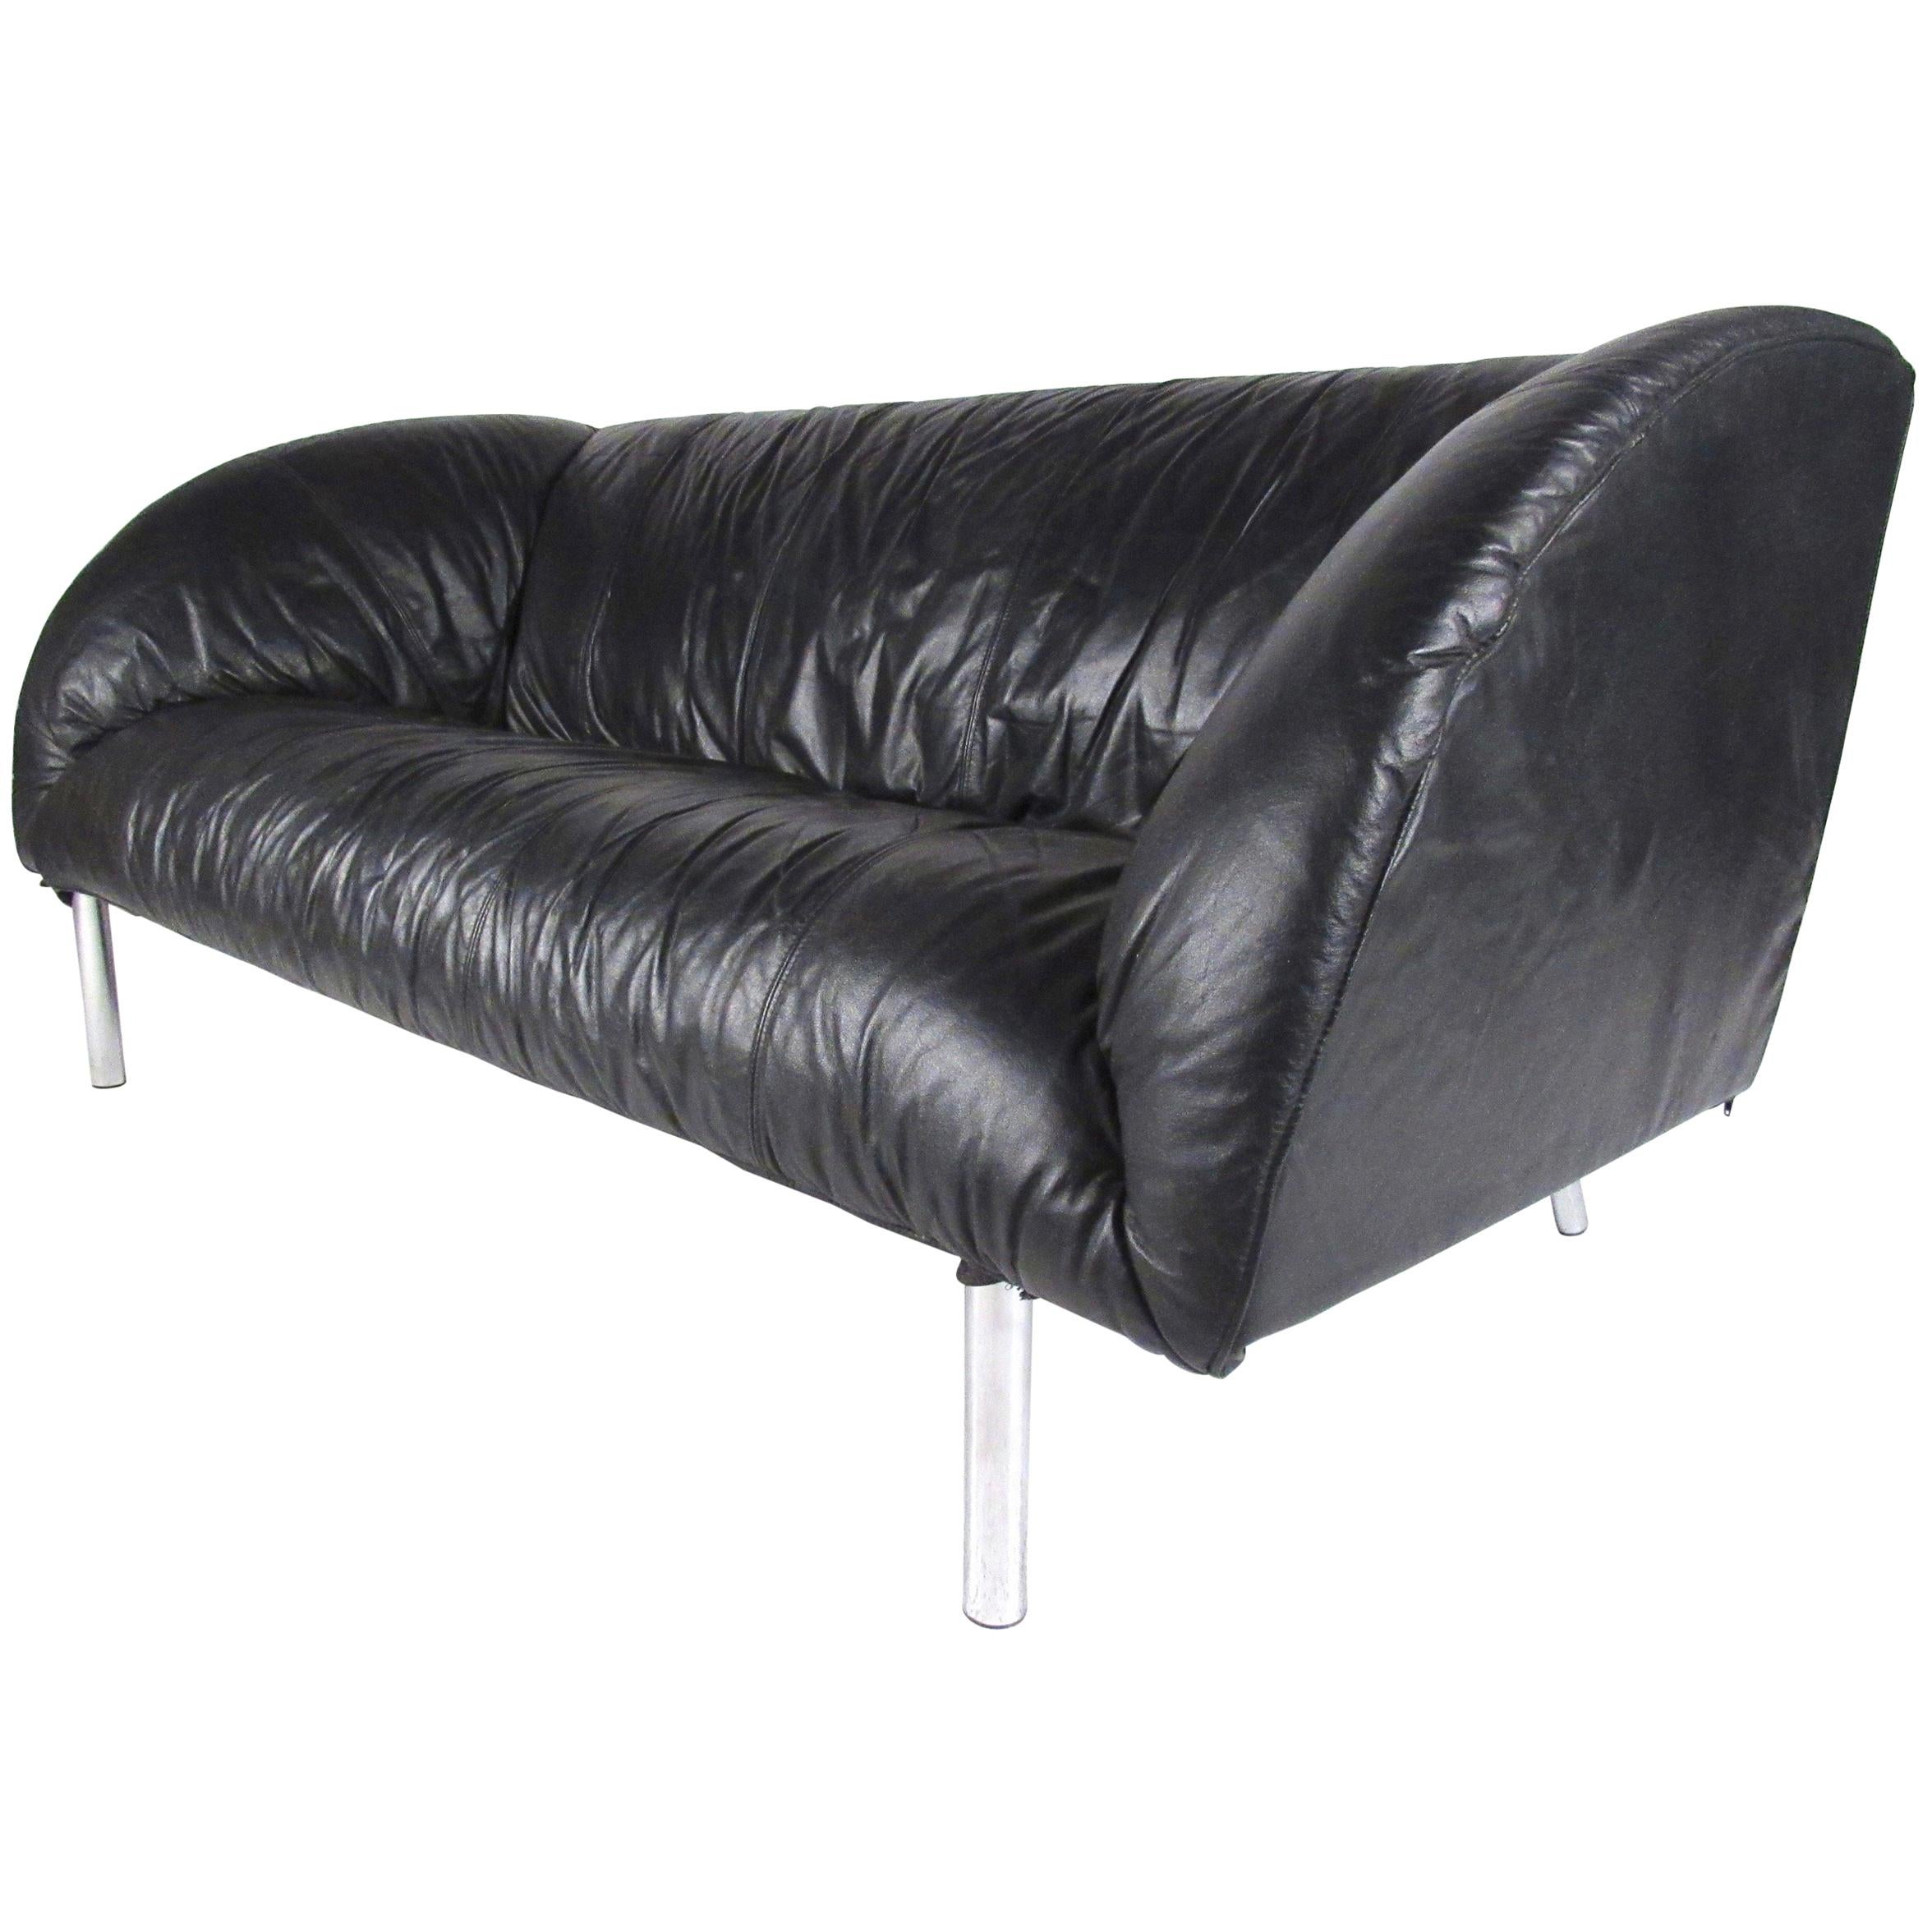 Stylish Modern Small Leather Sofa